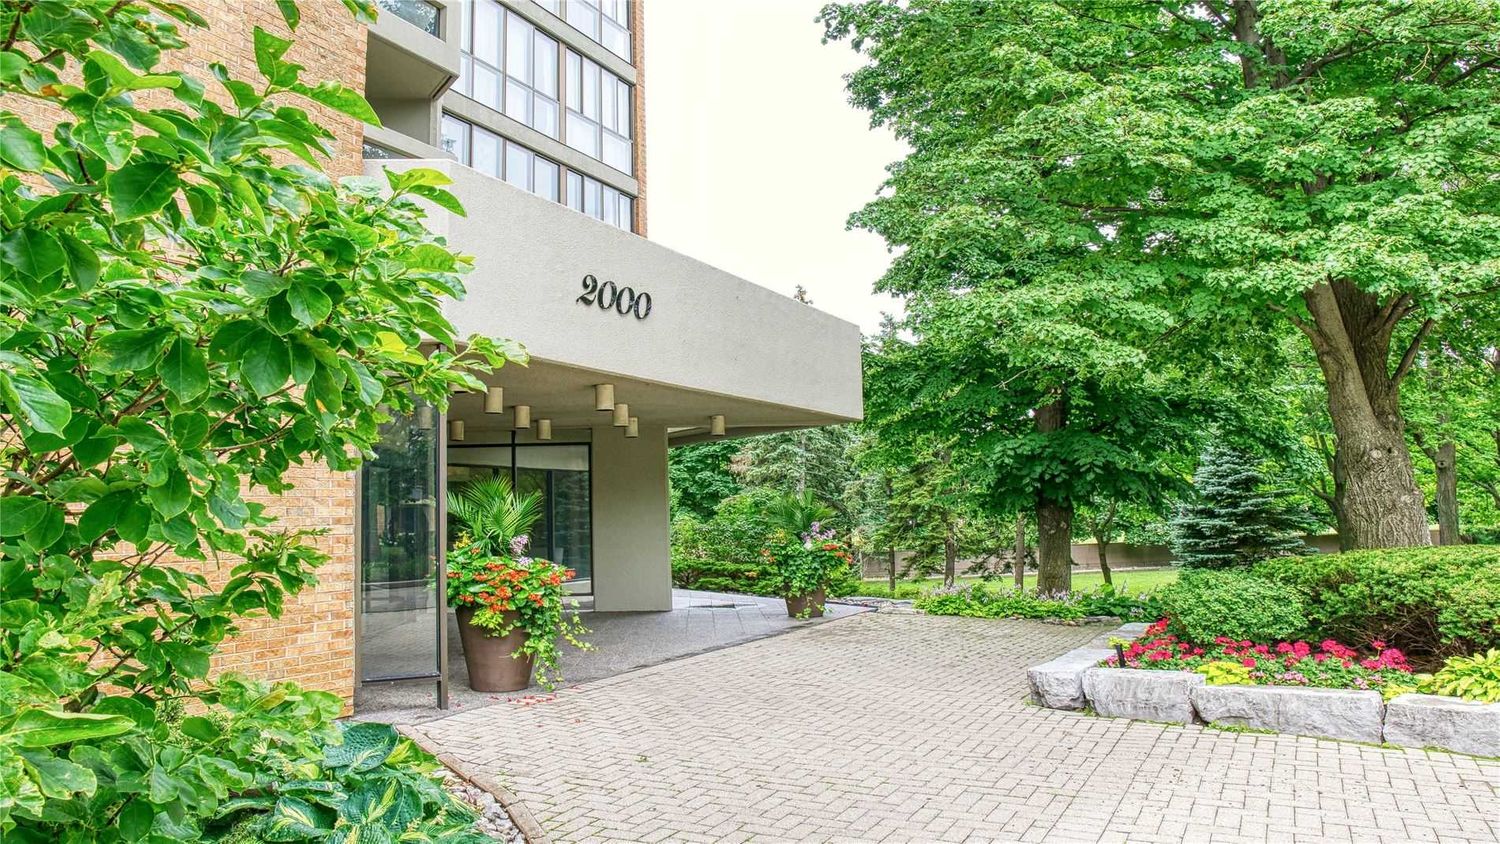 2000 Islington Avenue. Islington 2000 Condos is located in  Etobicoke, Toronto - image #3 of 3